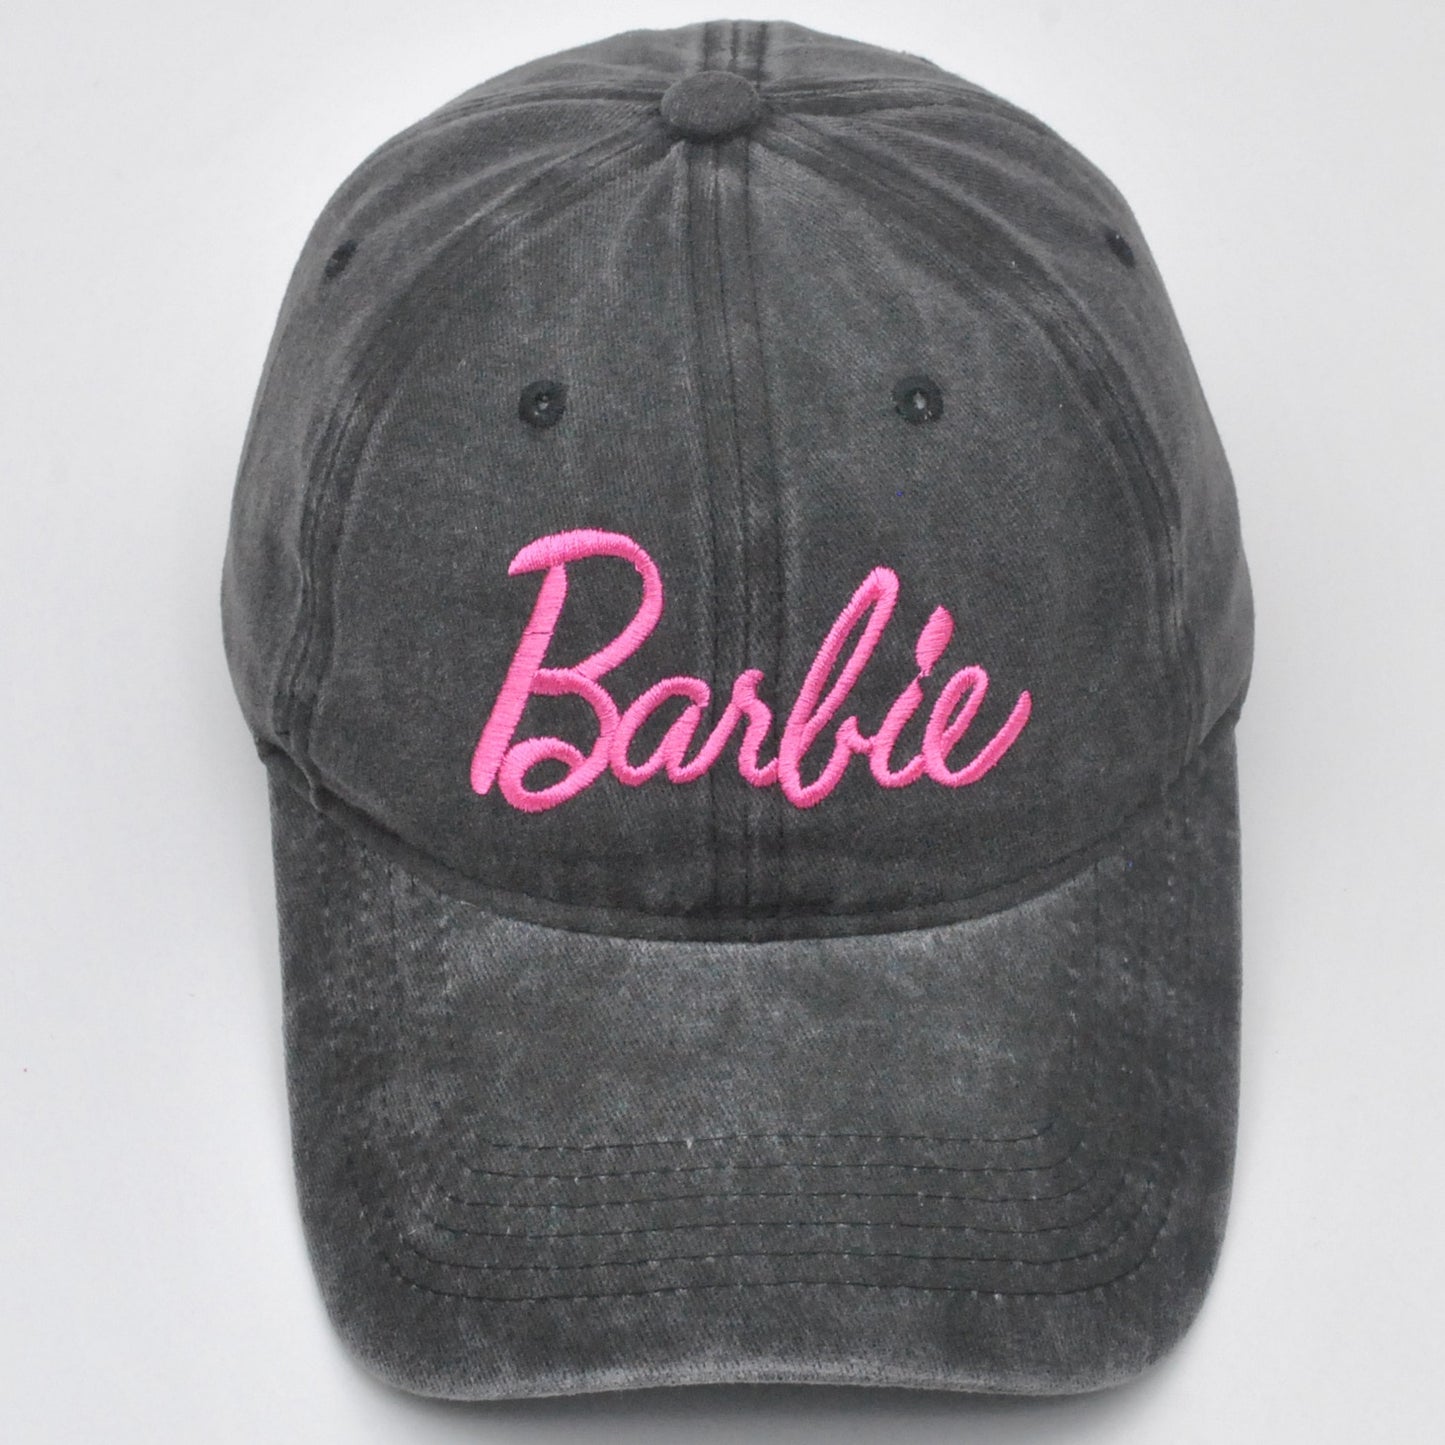 2023 New Summer Barbie Baseball Cap Kawaii Fashion Adults Girls Boys Casual Adjustable Outdoor Sunshade Hat Hip Hop Unisex Caps